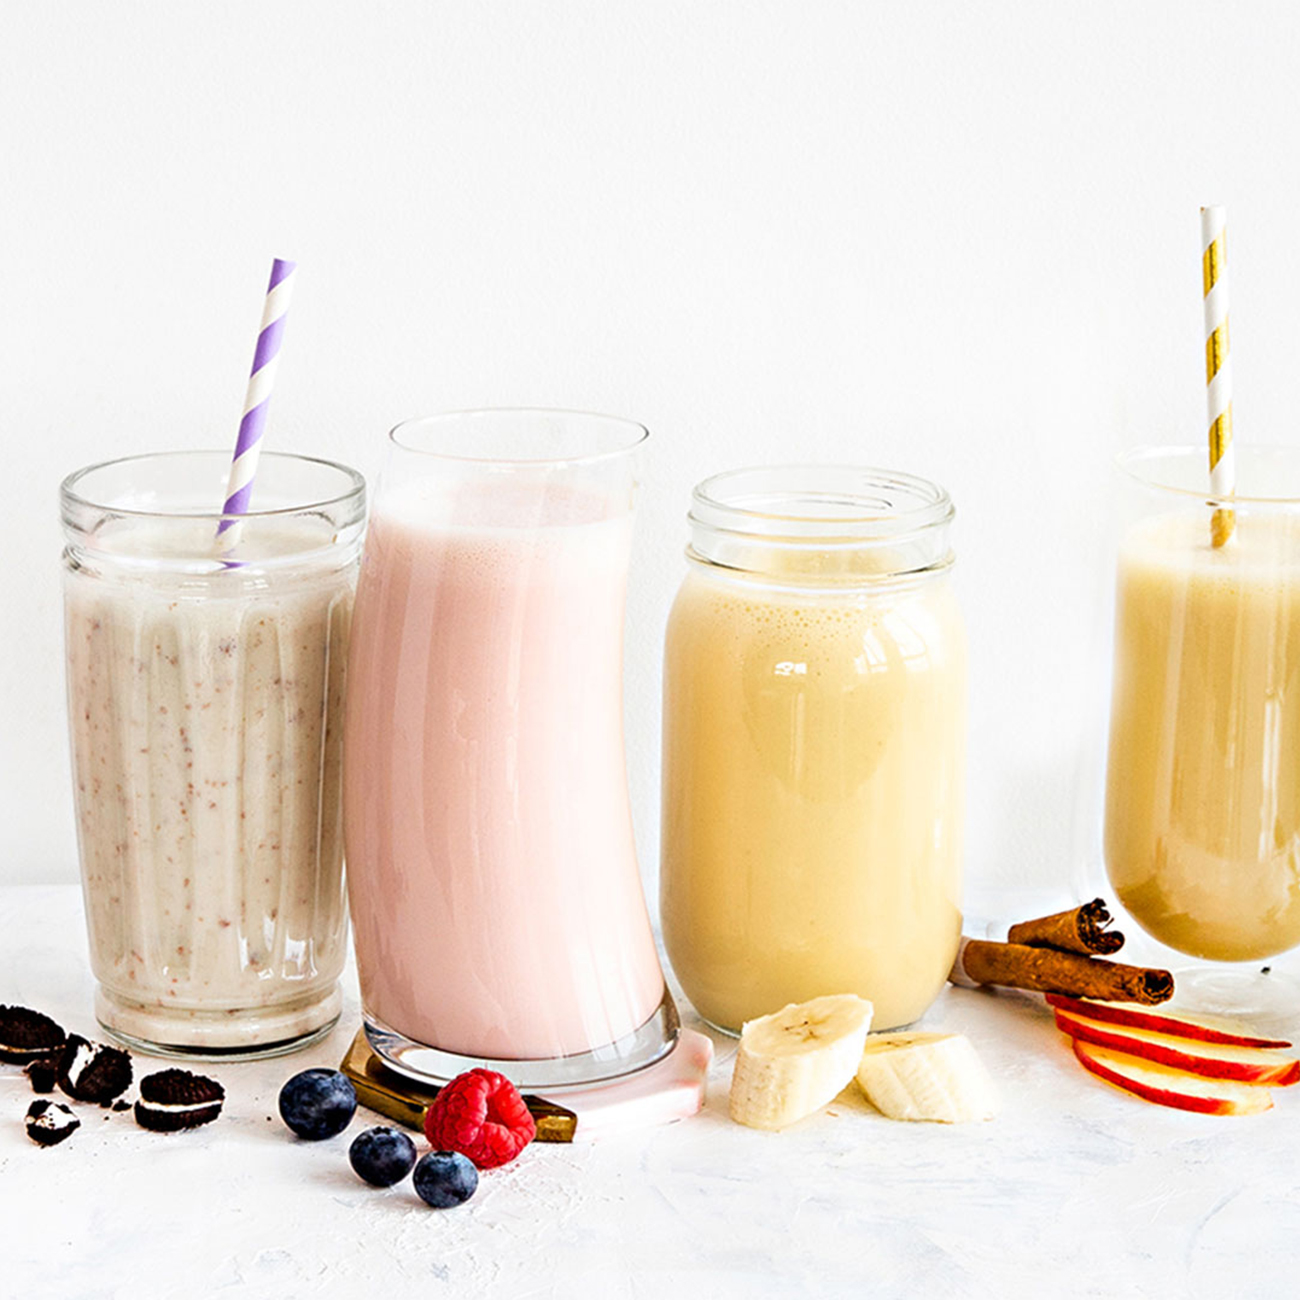 2x strawberry shake, 2x  chocolete shake, 4x shakamate, 2x fiber powder, 2x multi, 1 probiotic. 